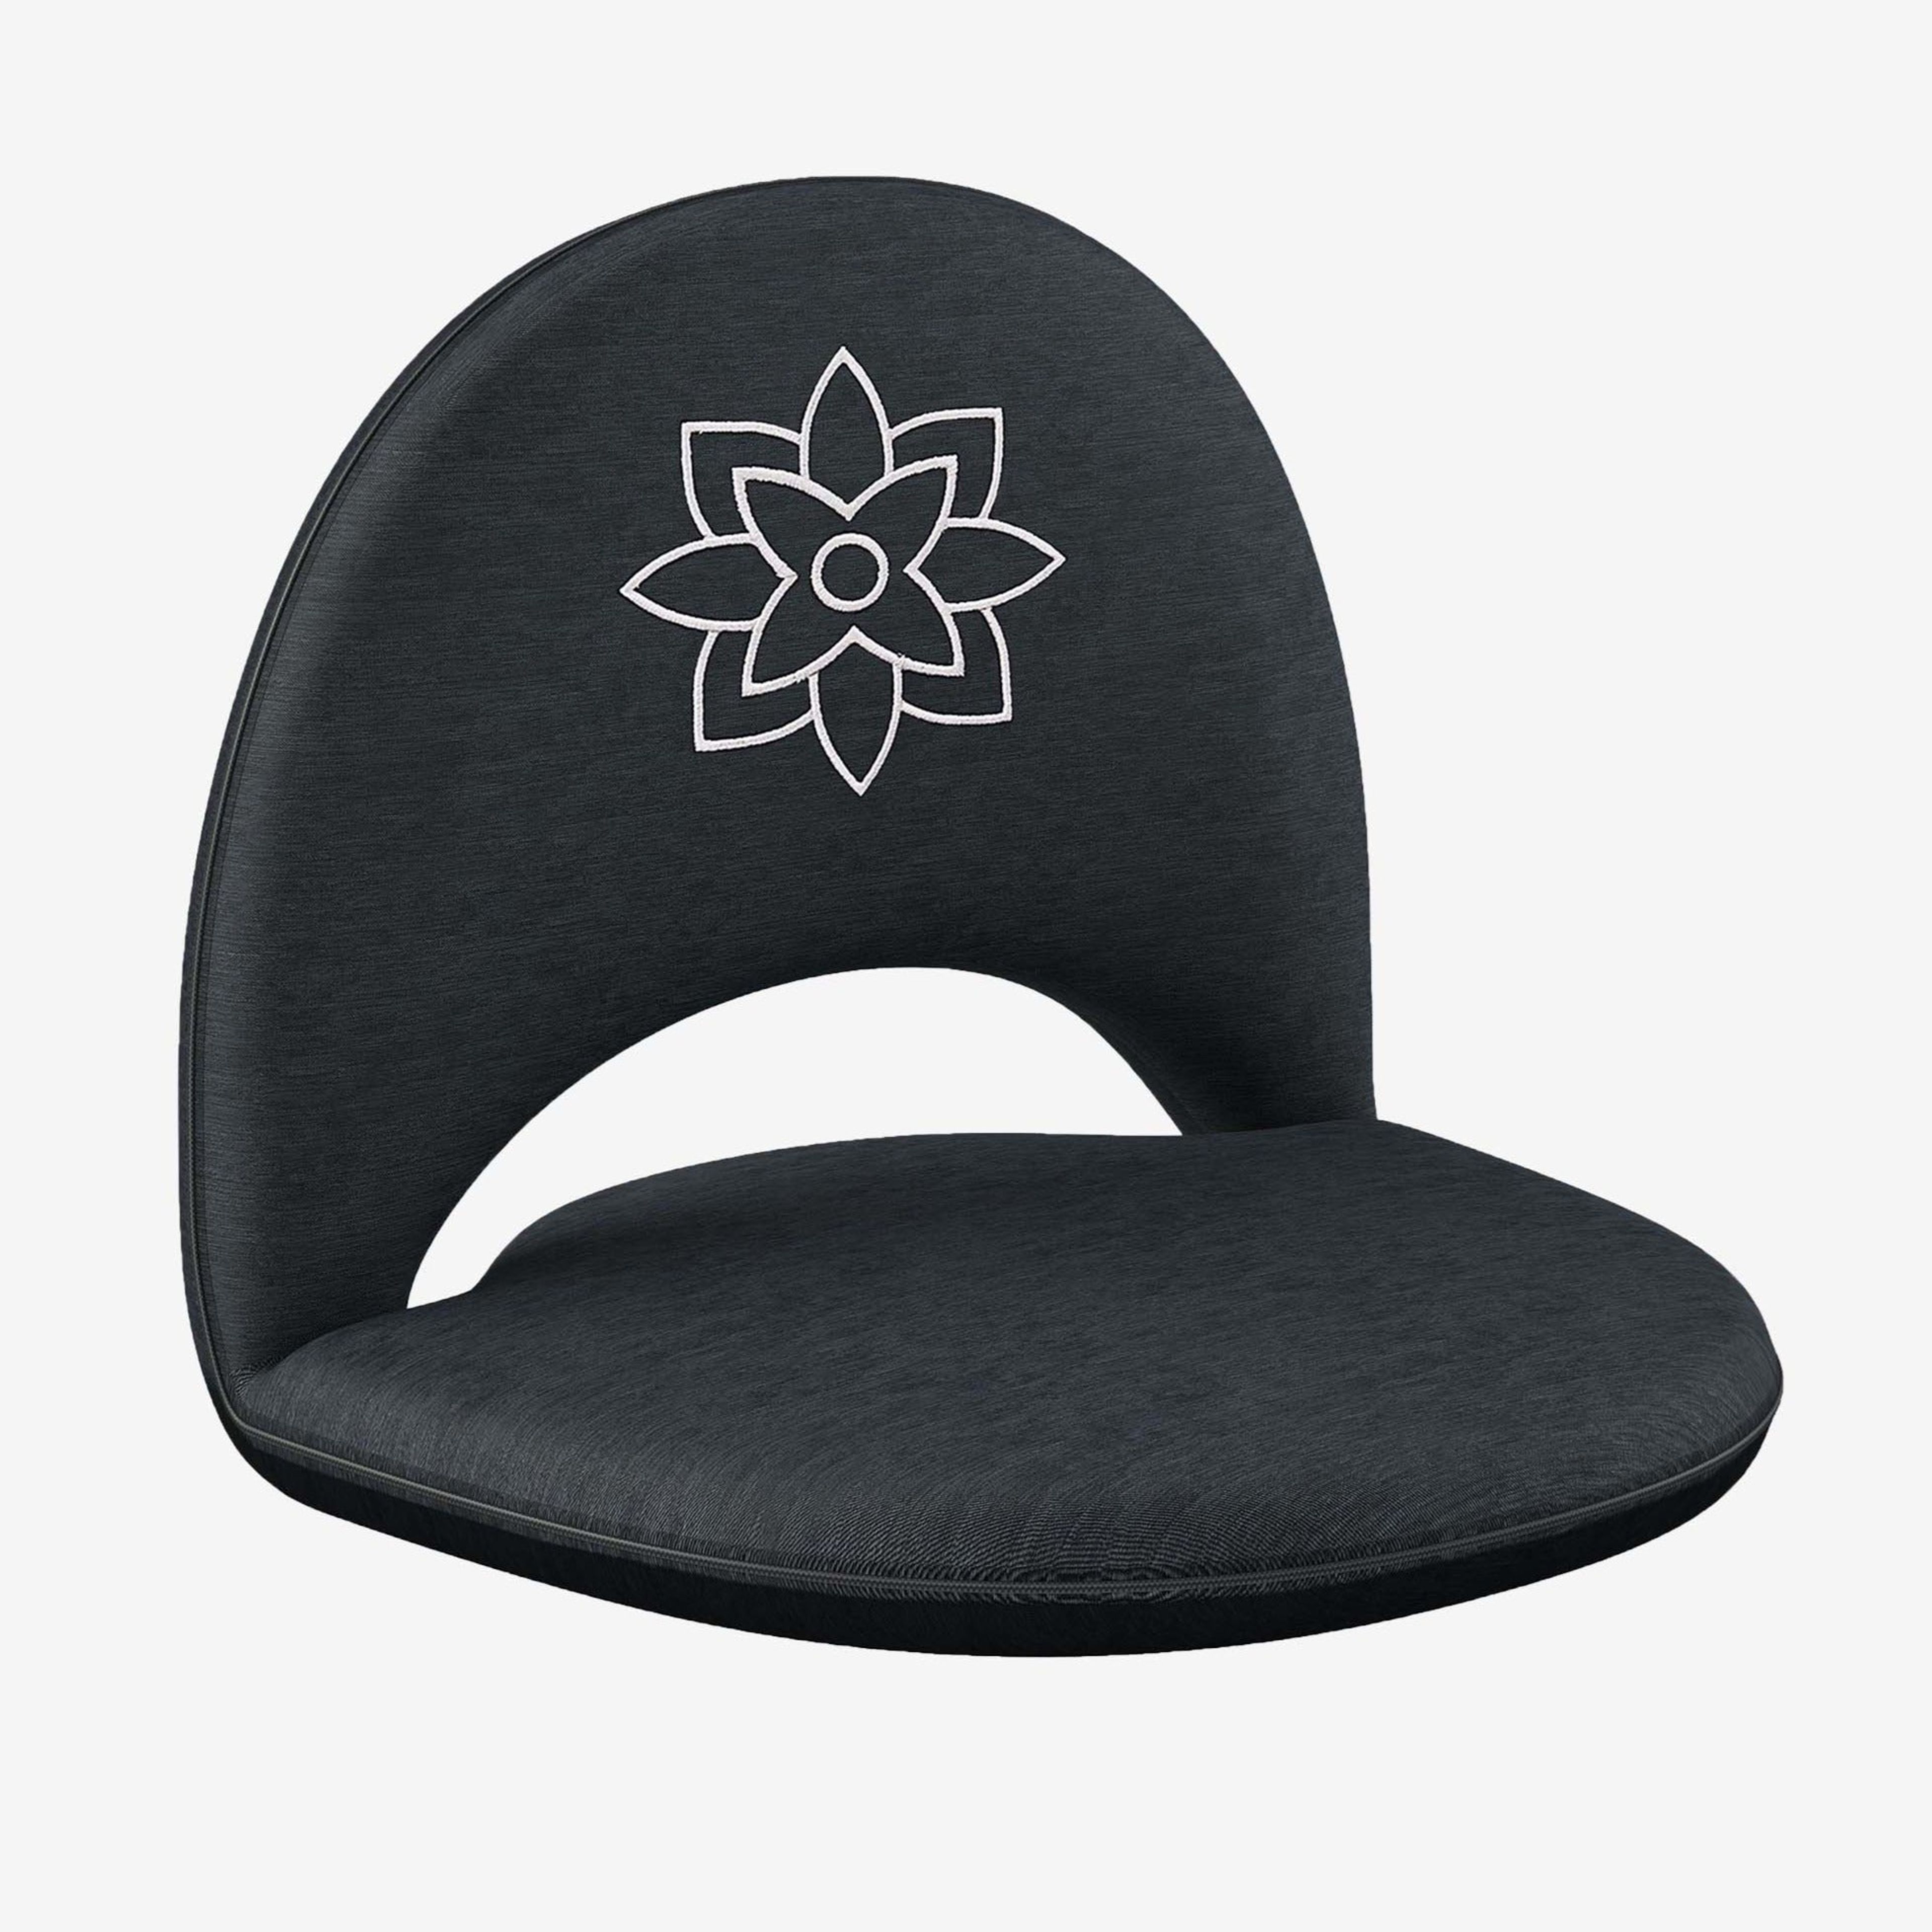 Portable Meditation Chair